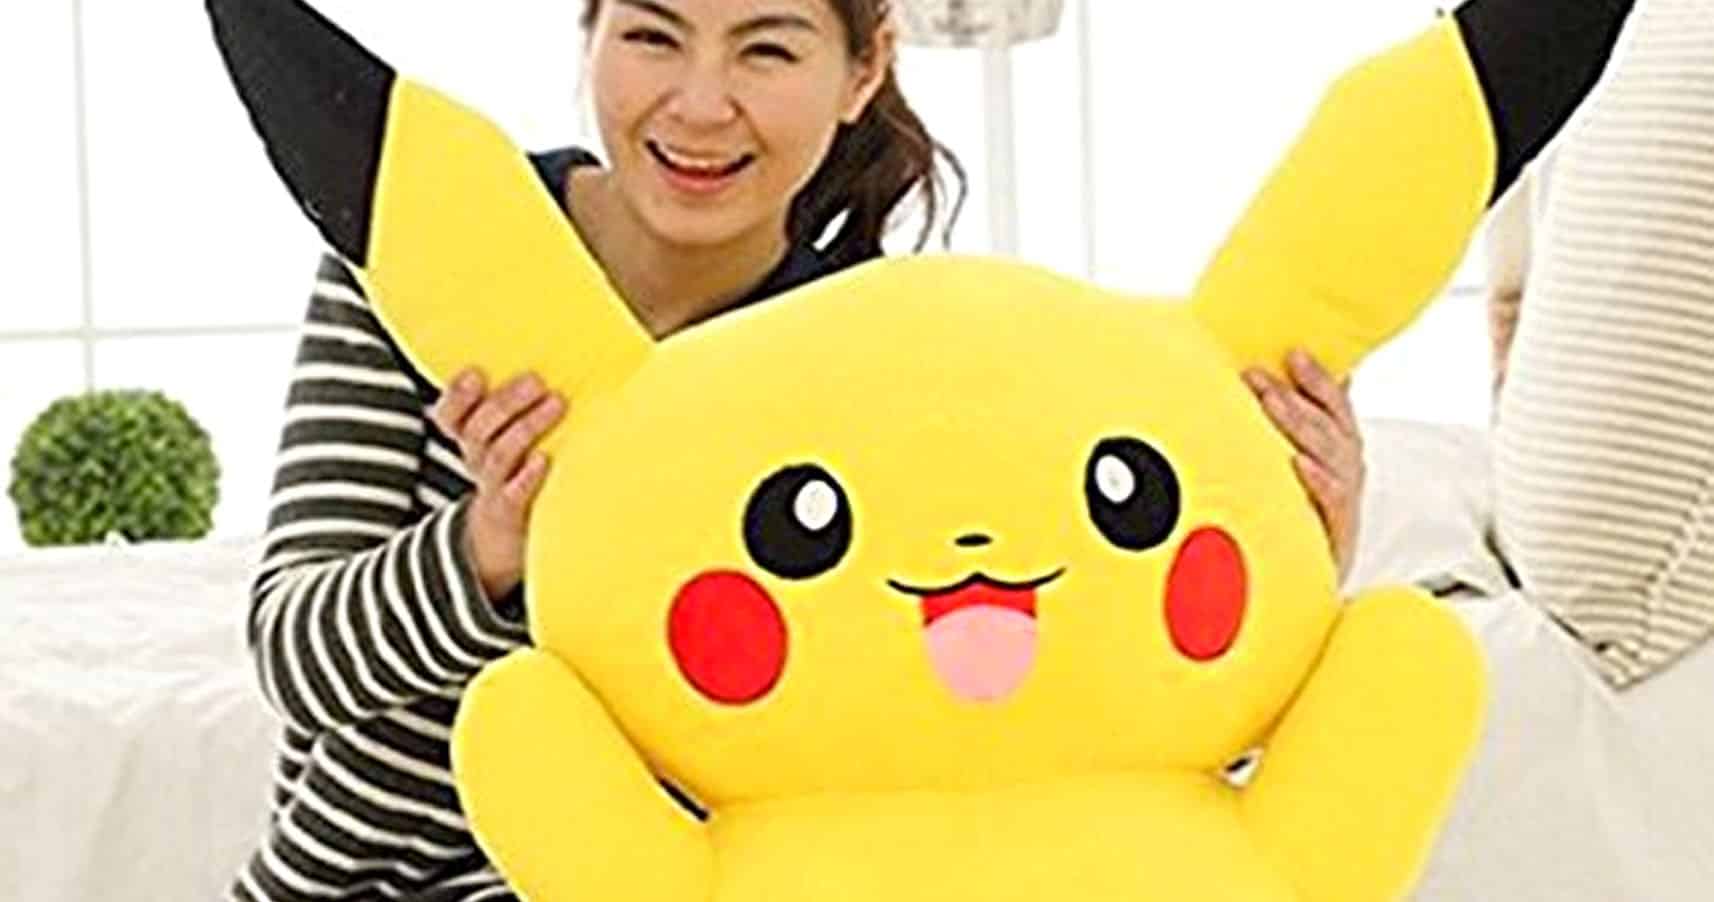 Giant Pikachu Plush Pokemon Shut Up And Take My Yen : Anime & Gaming Merchandise